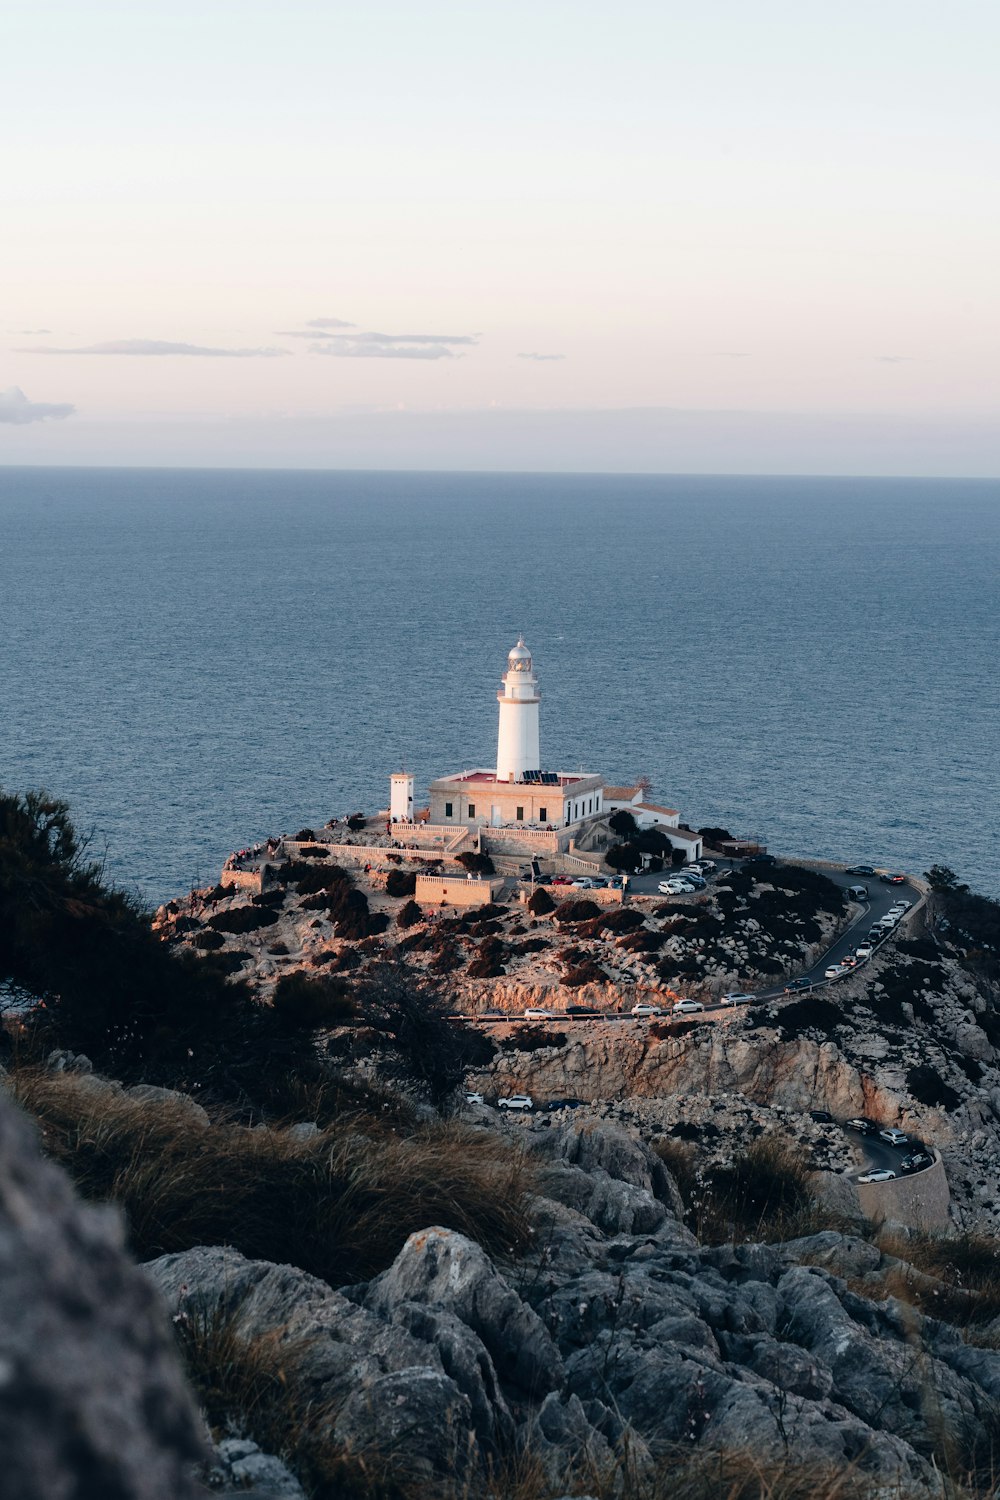 a lighthouse on top of a rocky hill near the ocean